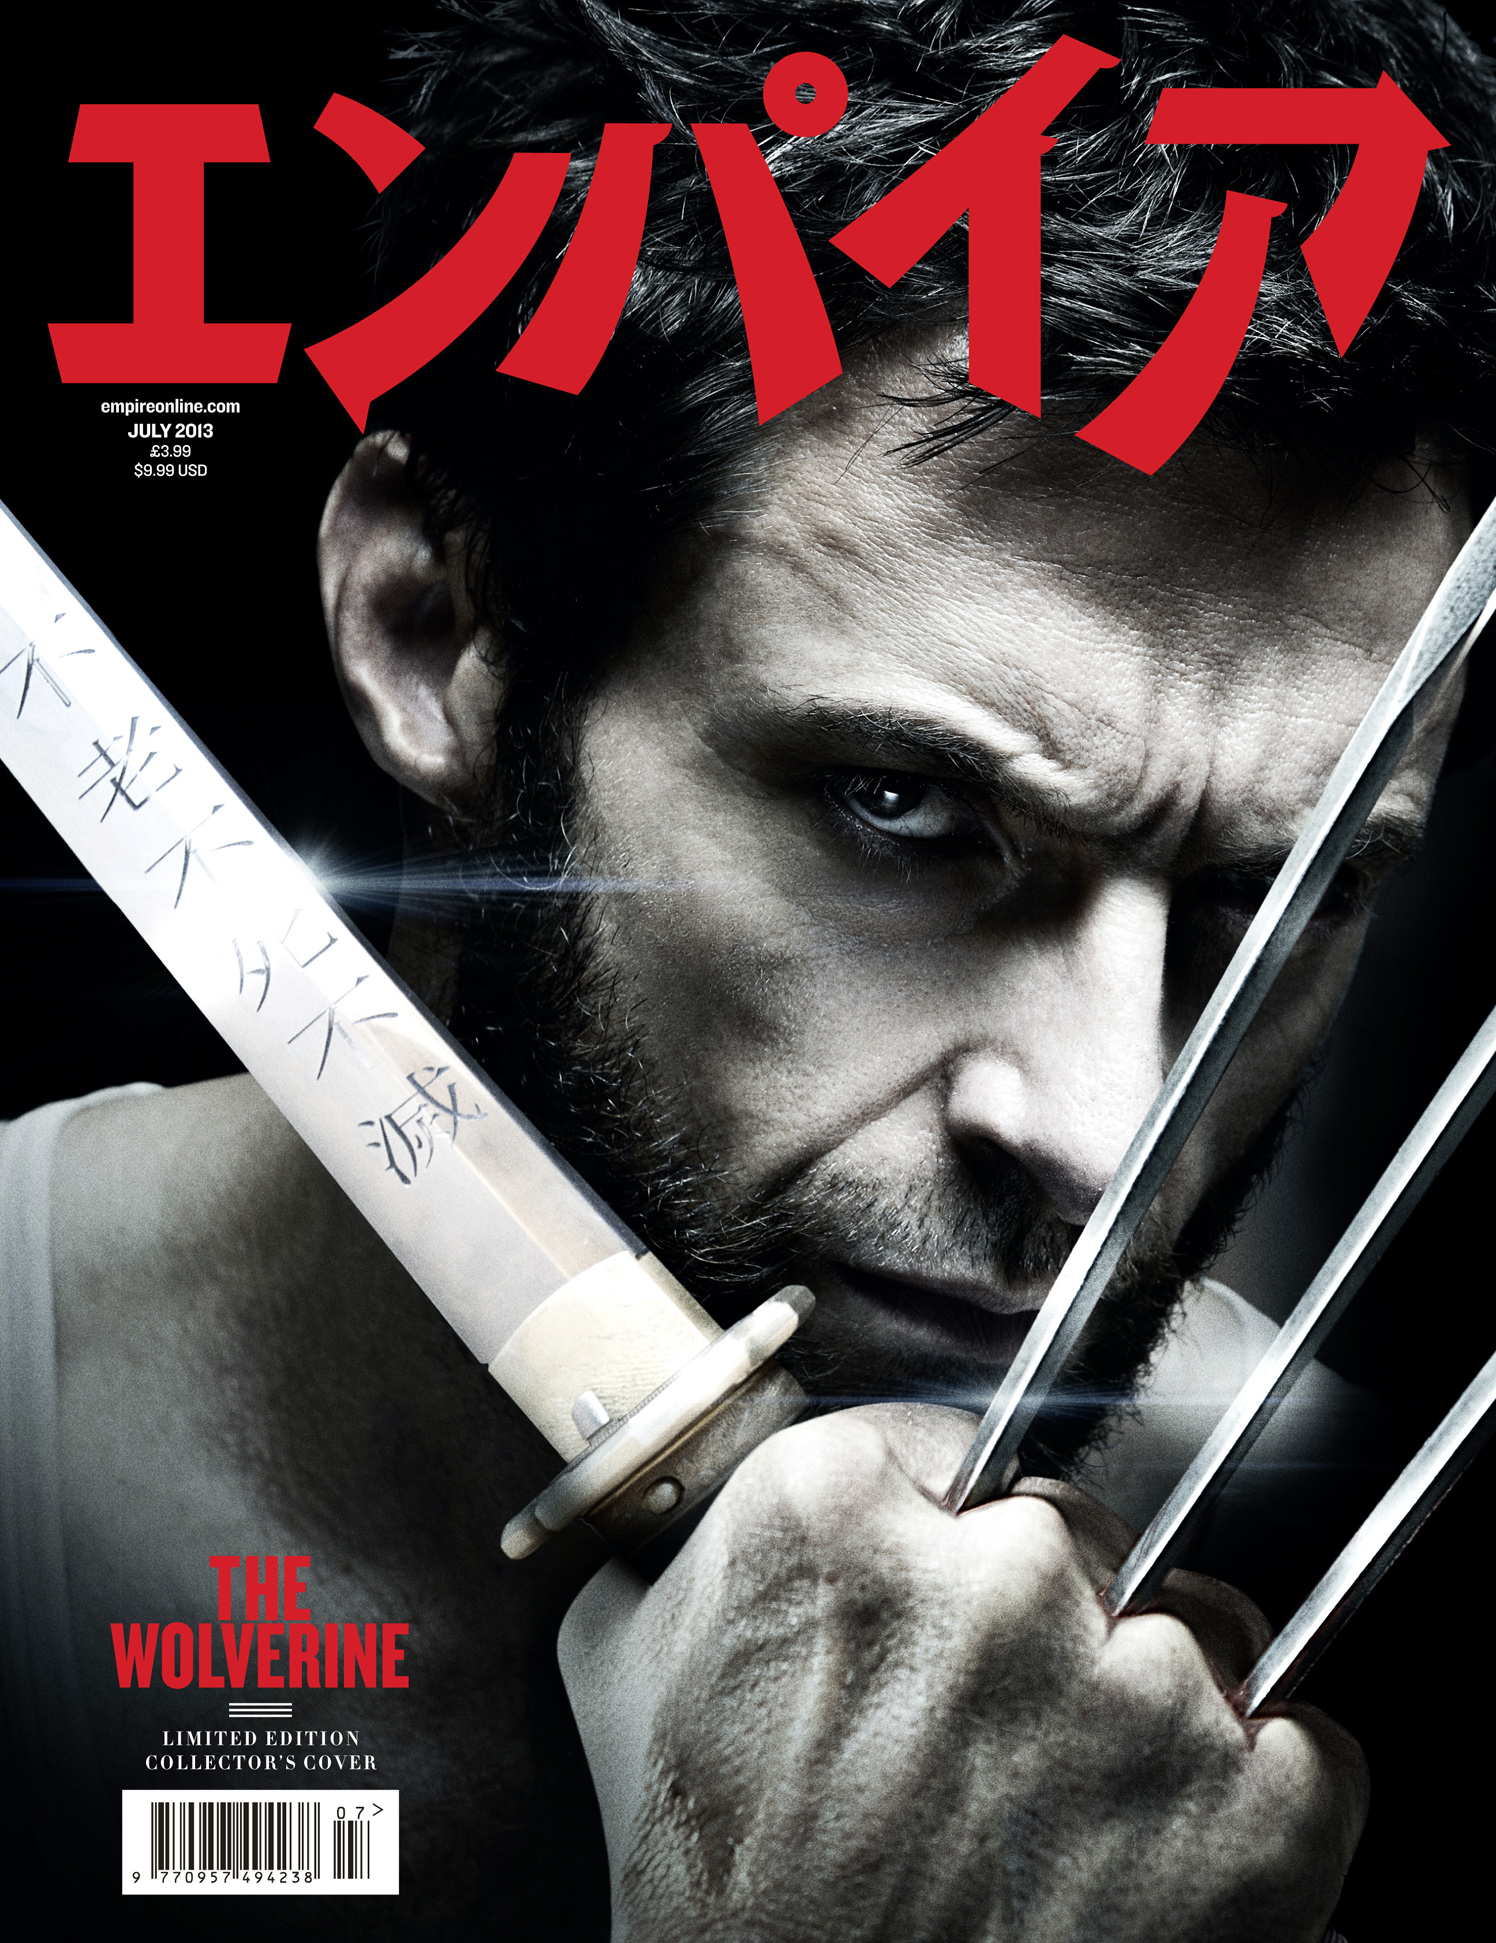 The Wolverine / Empire Magazine